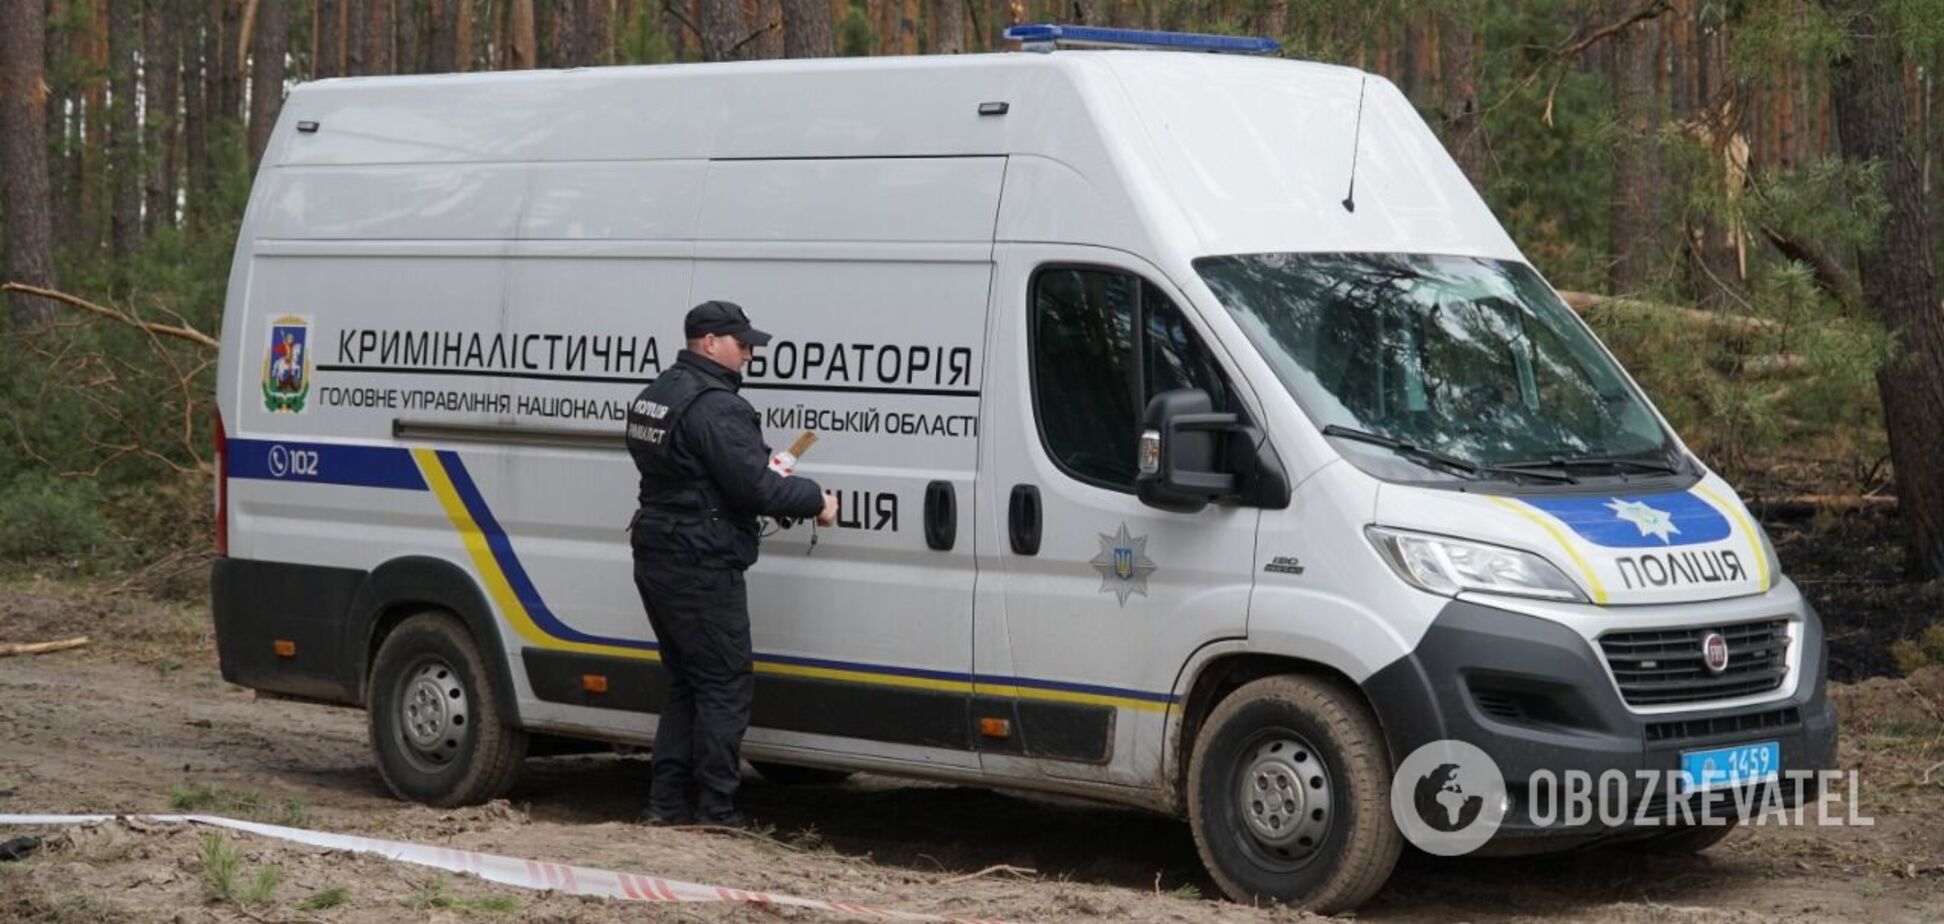 Тело украинца нашли на бывших позициях оккупантов